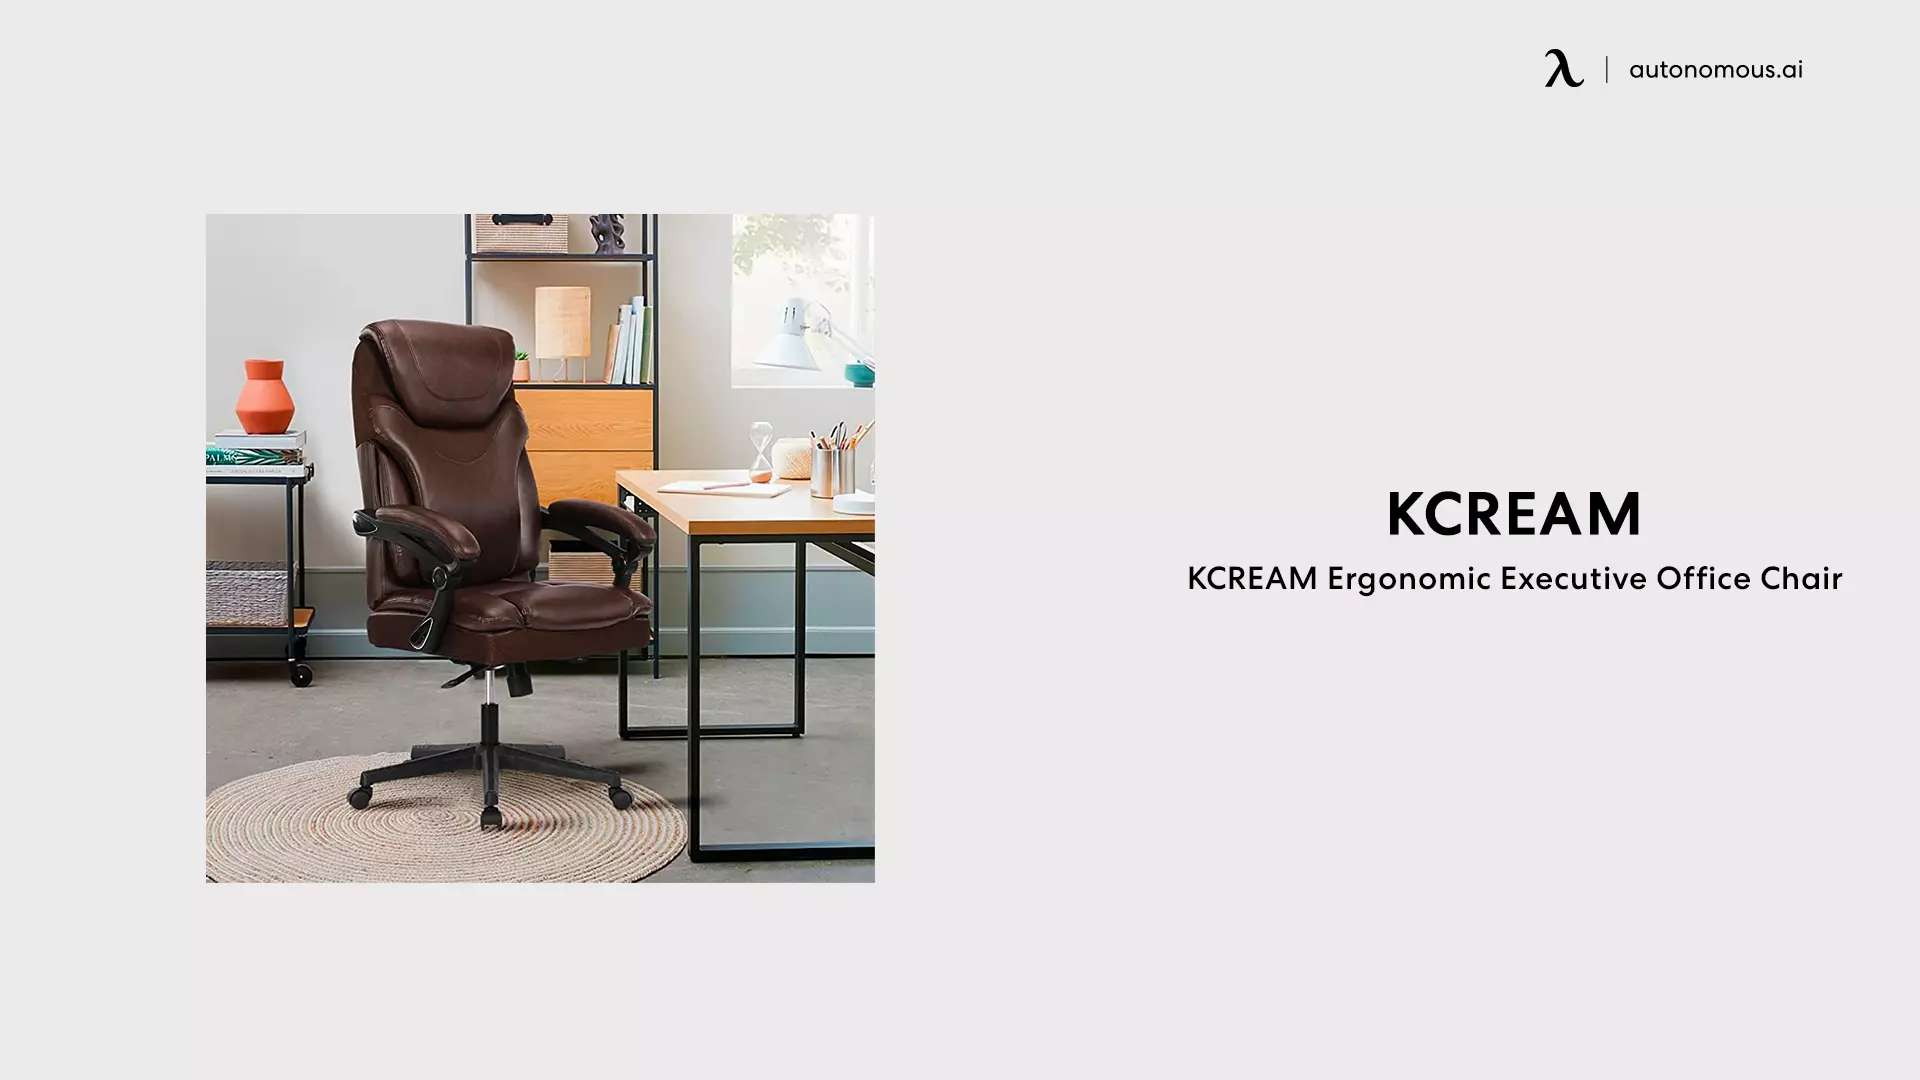 KCREAM Ergonomic Executive Office Chair